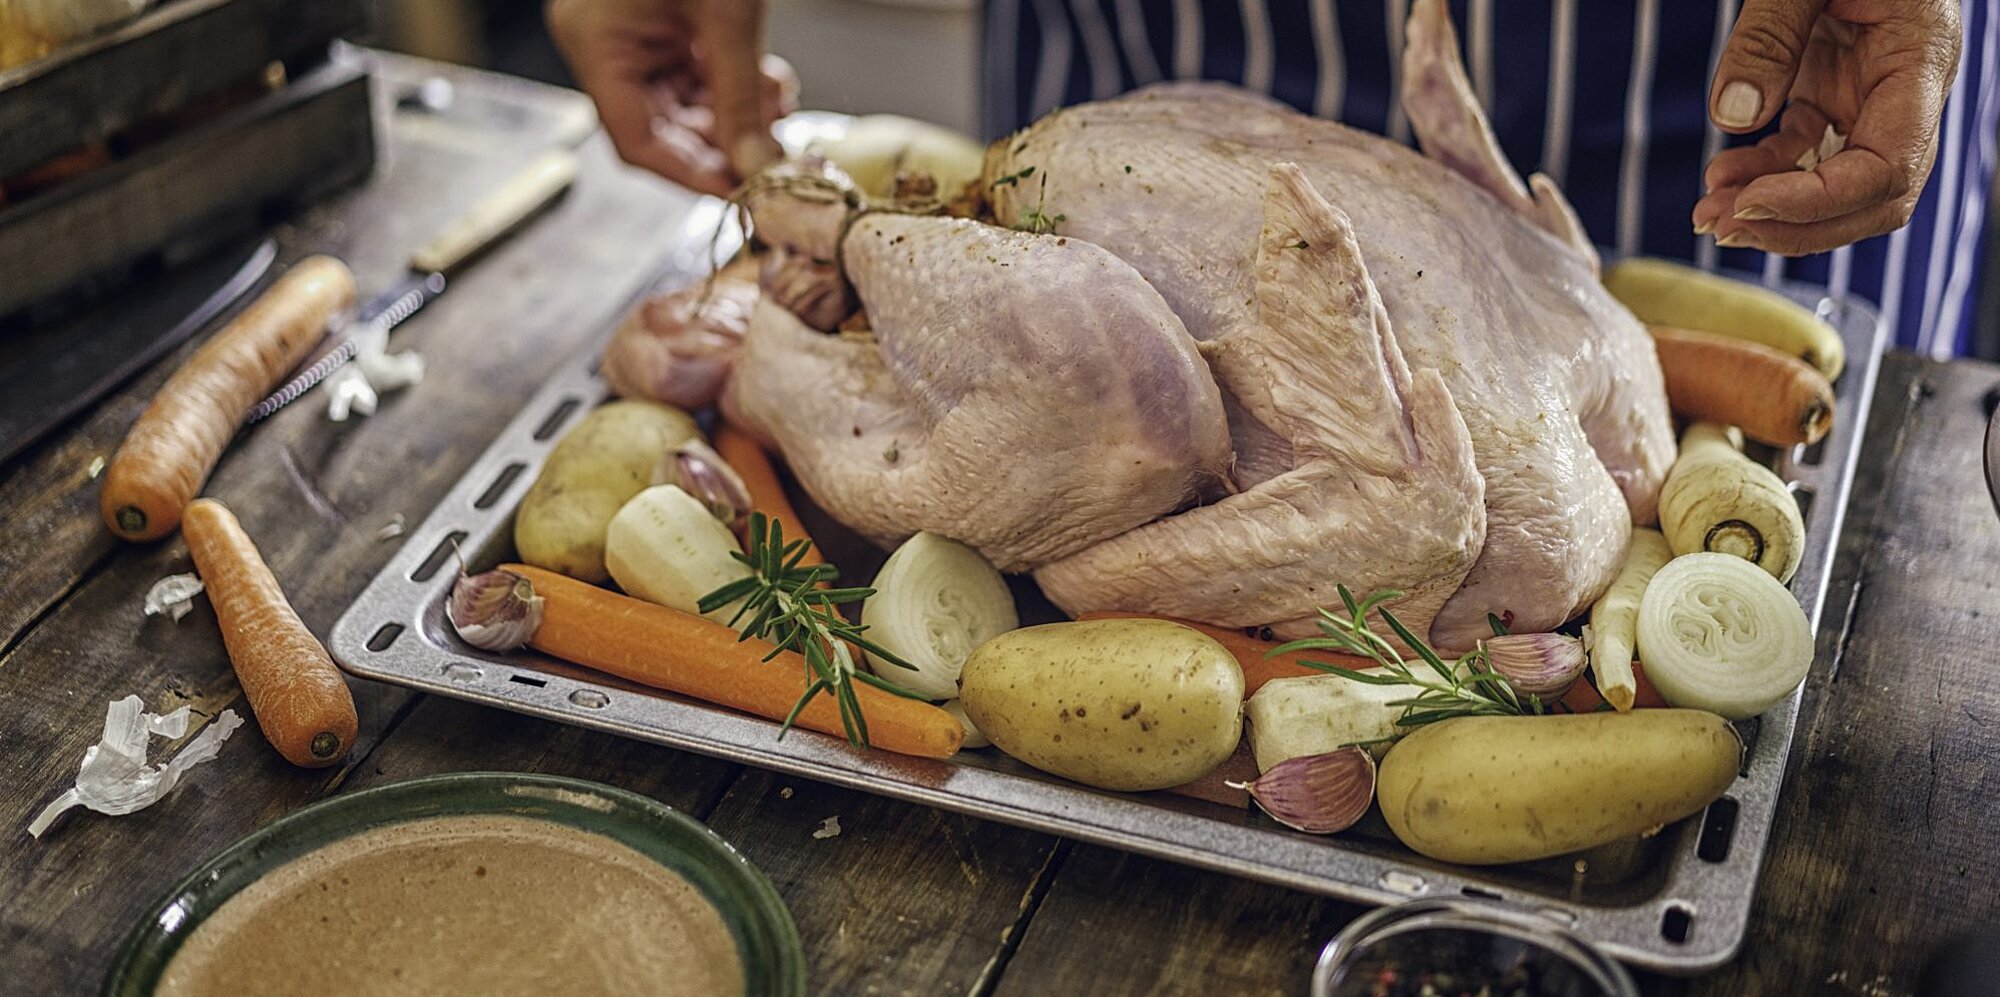 How to Cook a Frozen Turkey | MyRecipes